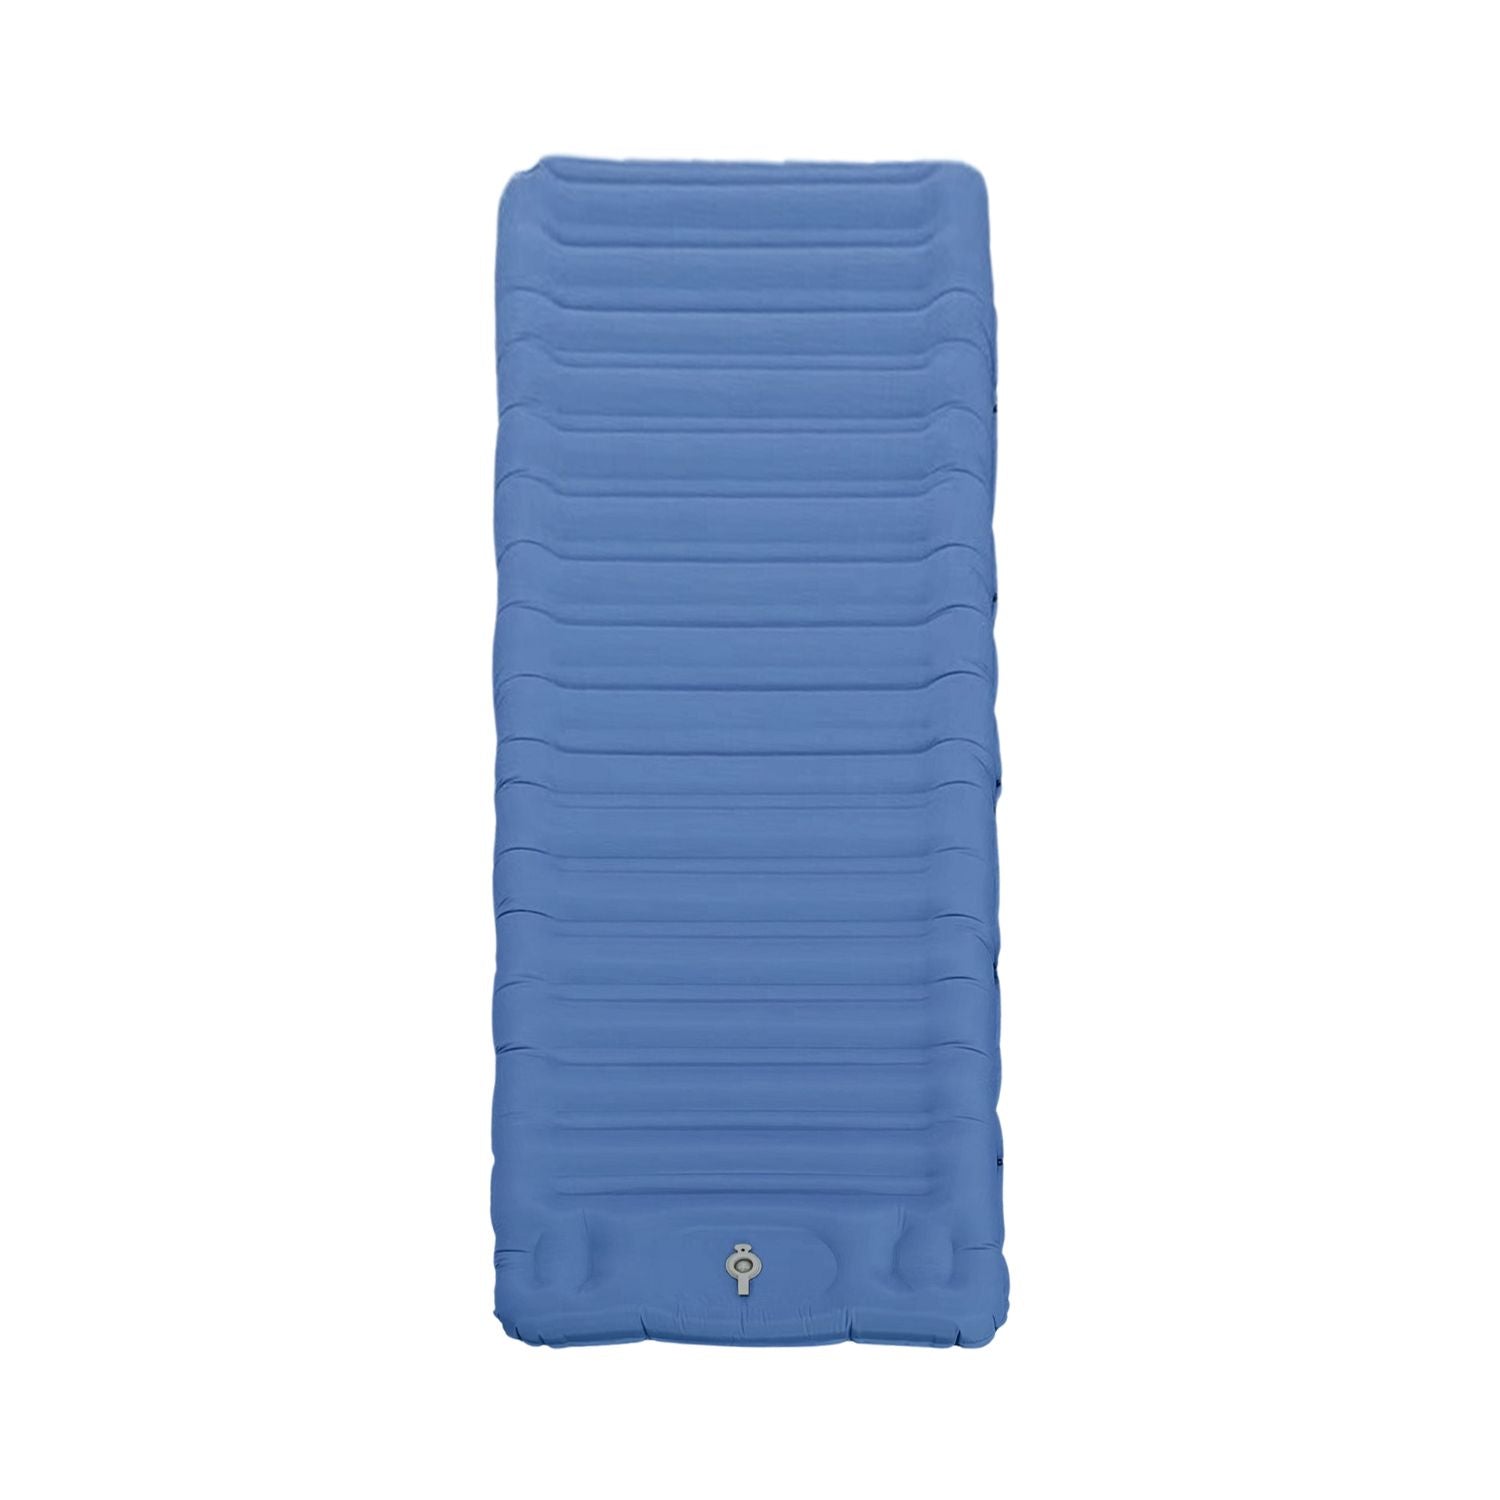 KILIROO Inflatable Camping Sleeping Pad (Blue)